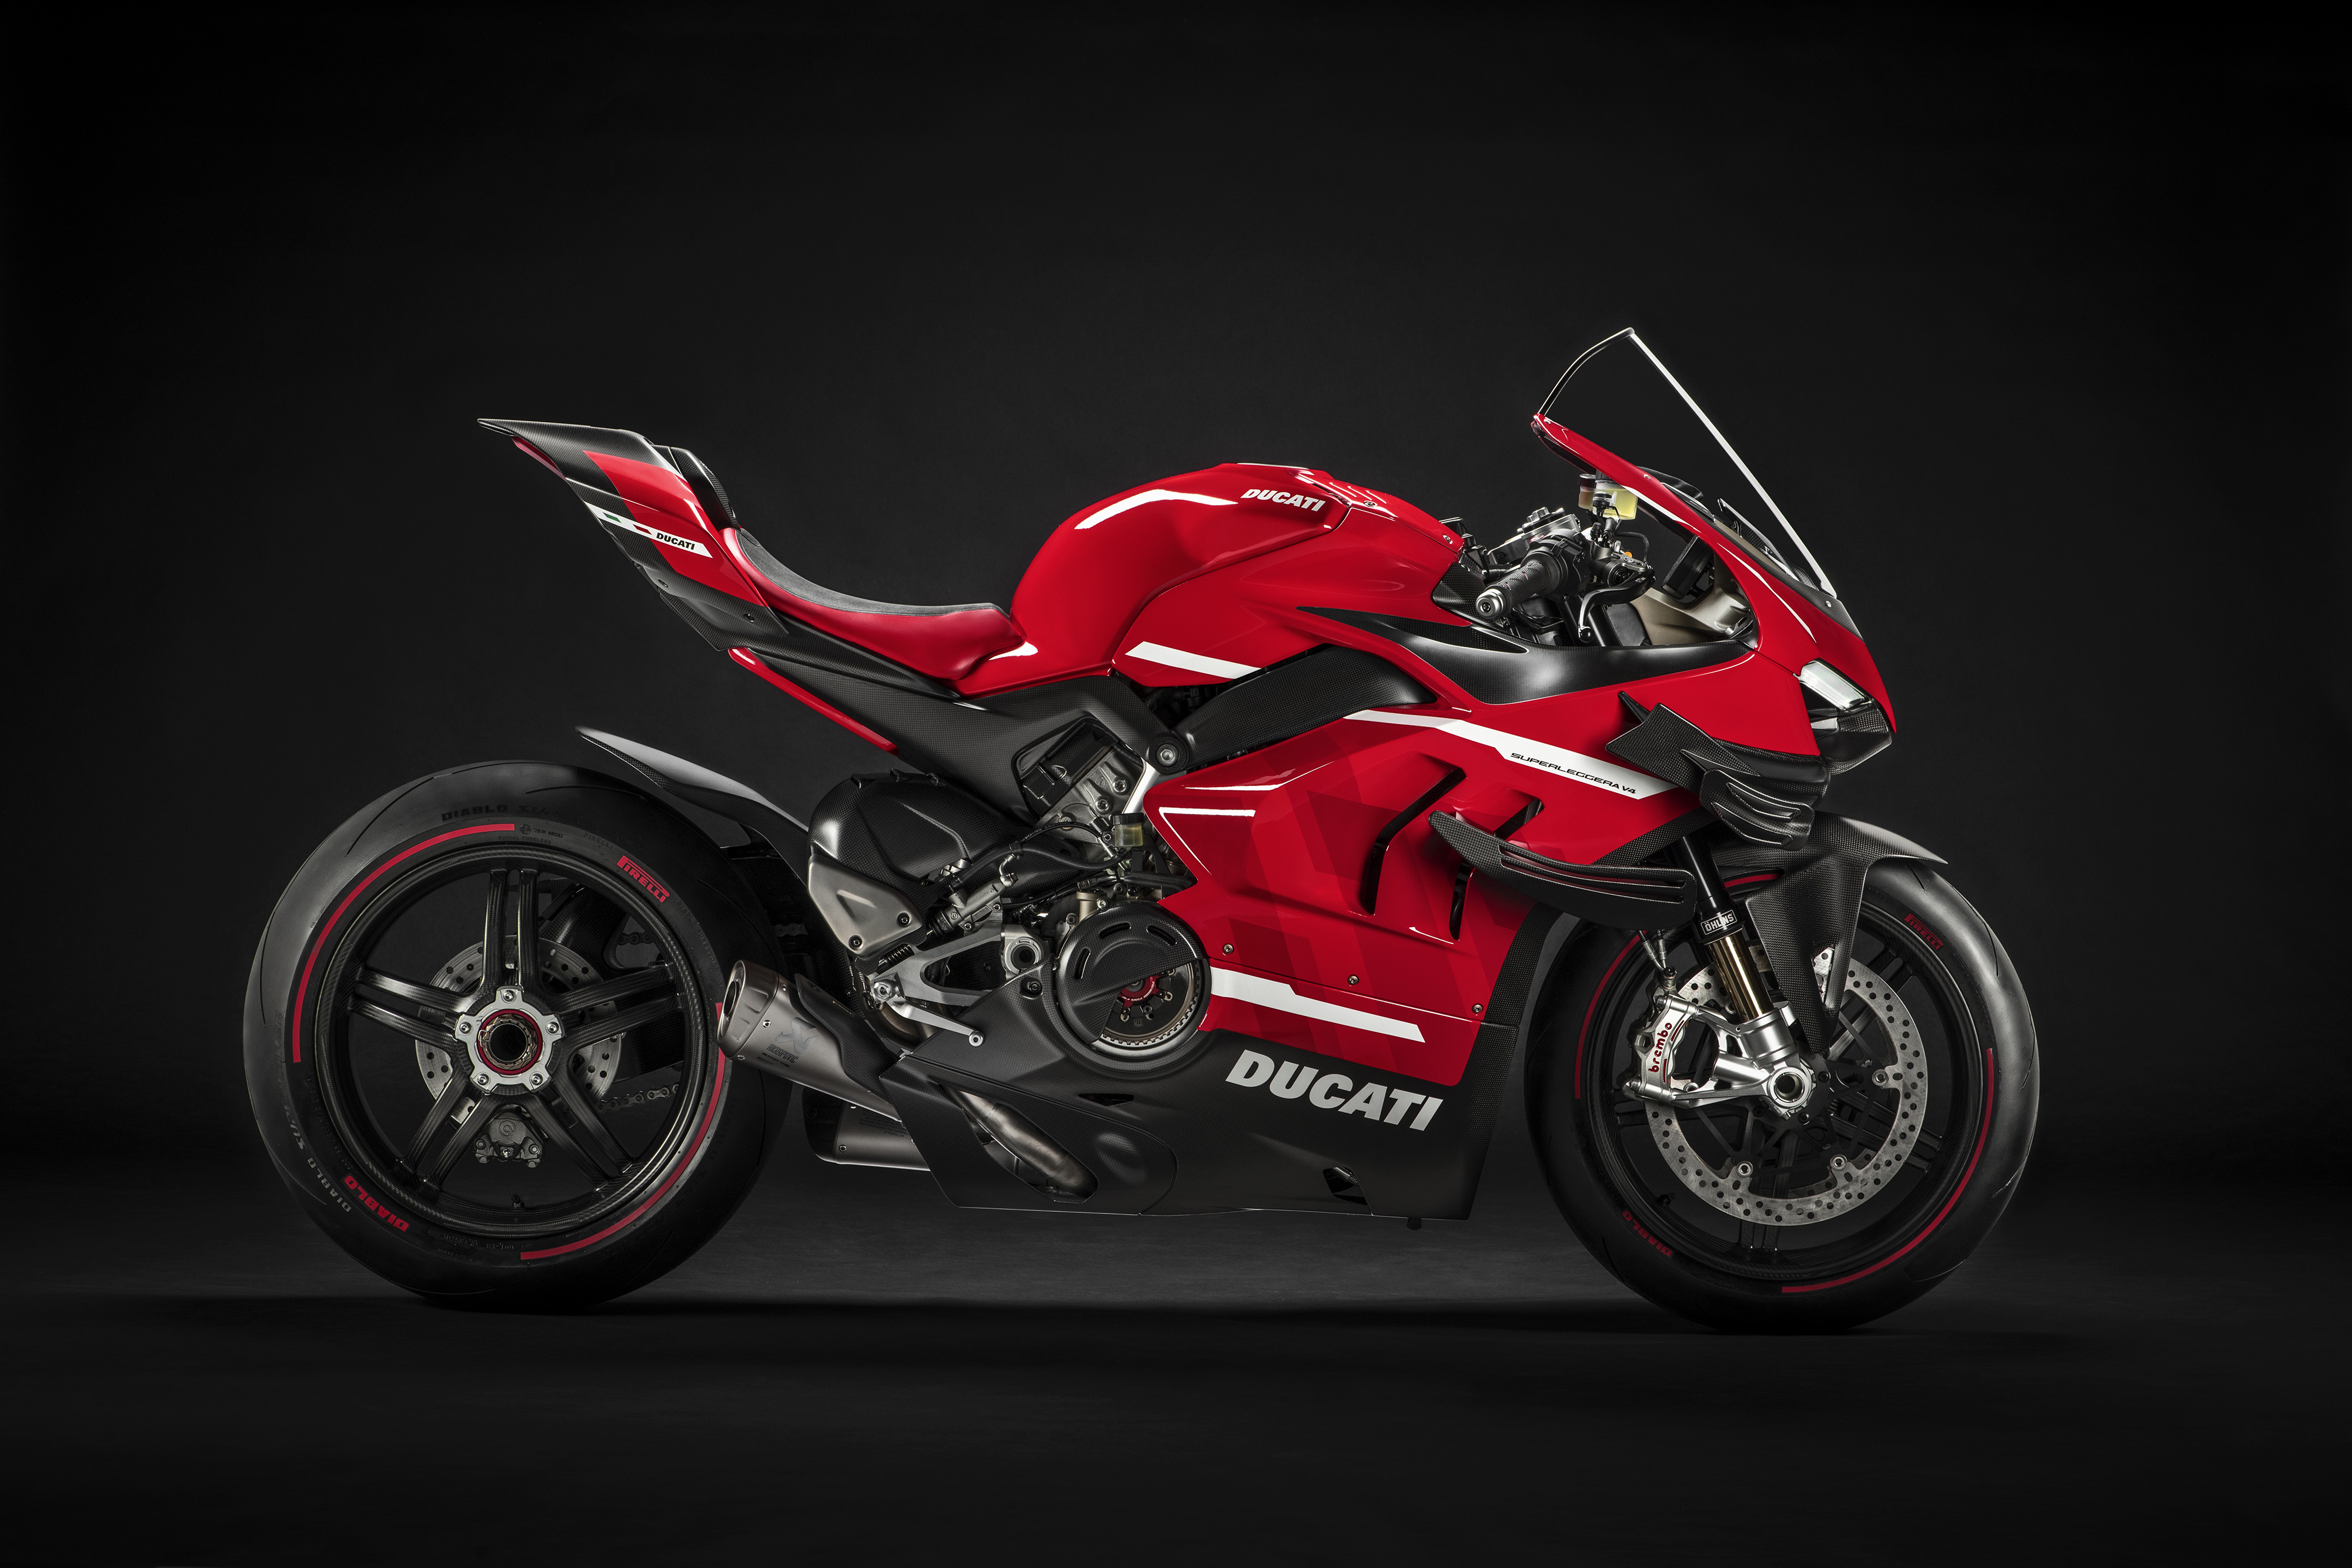 Ducati’s Superleggera V4 is its most powerful production road bike ever